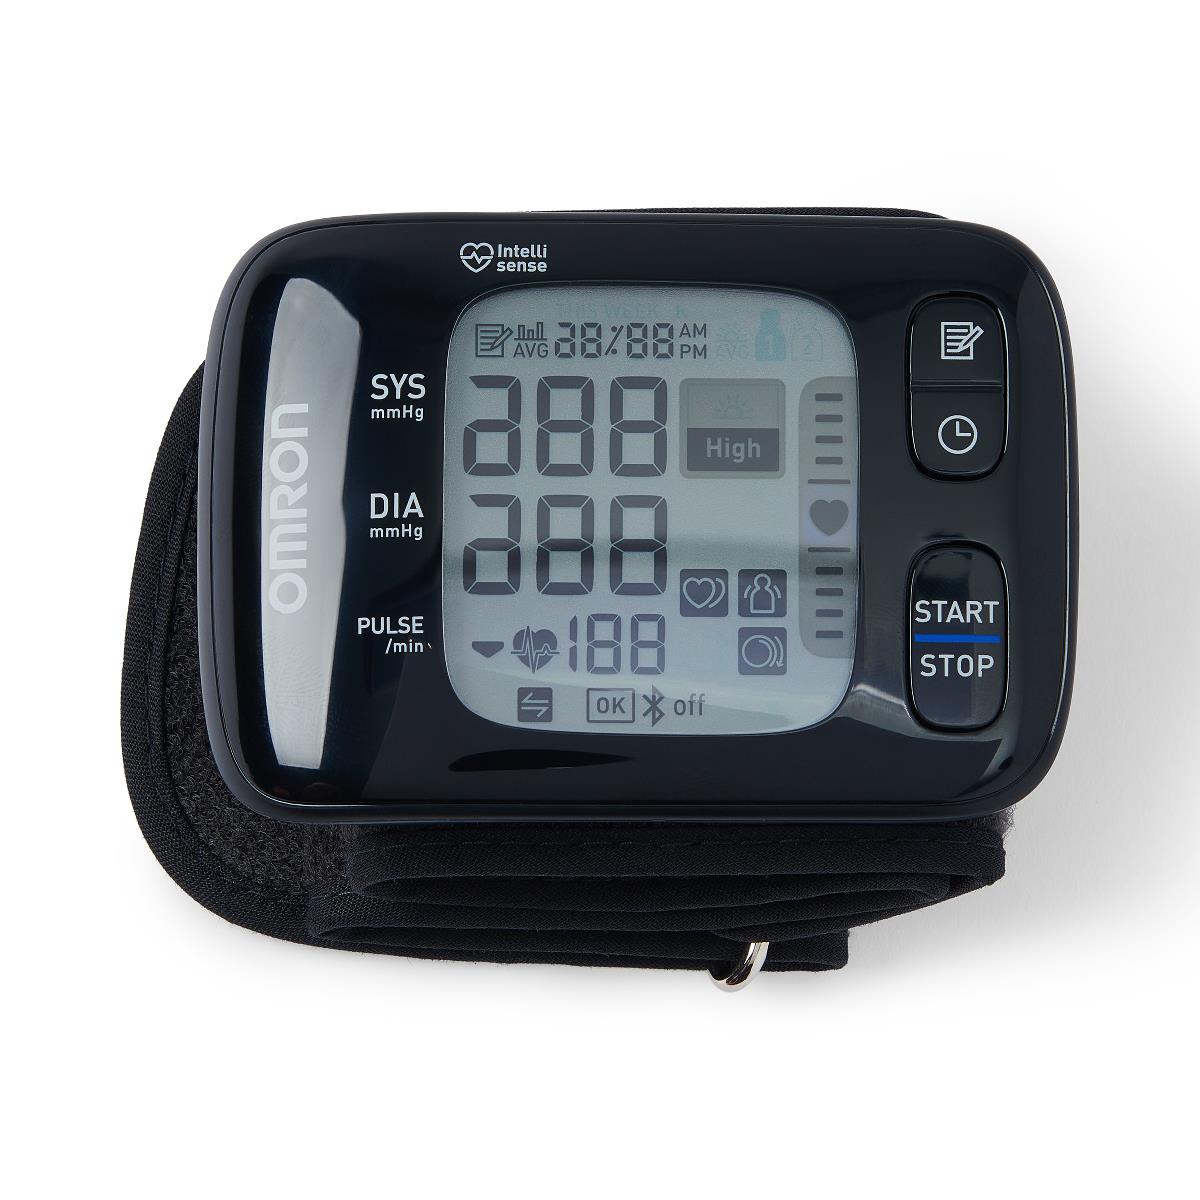 Omron 3 Series Wrist Blood Pressure Monitor, White